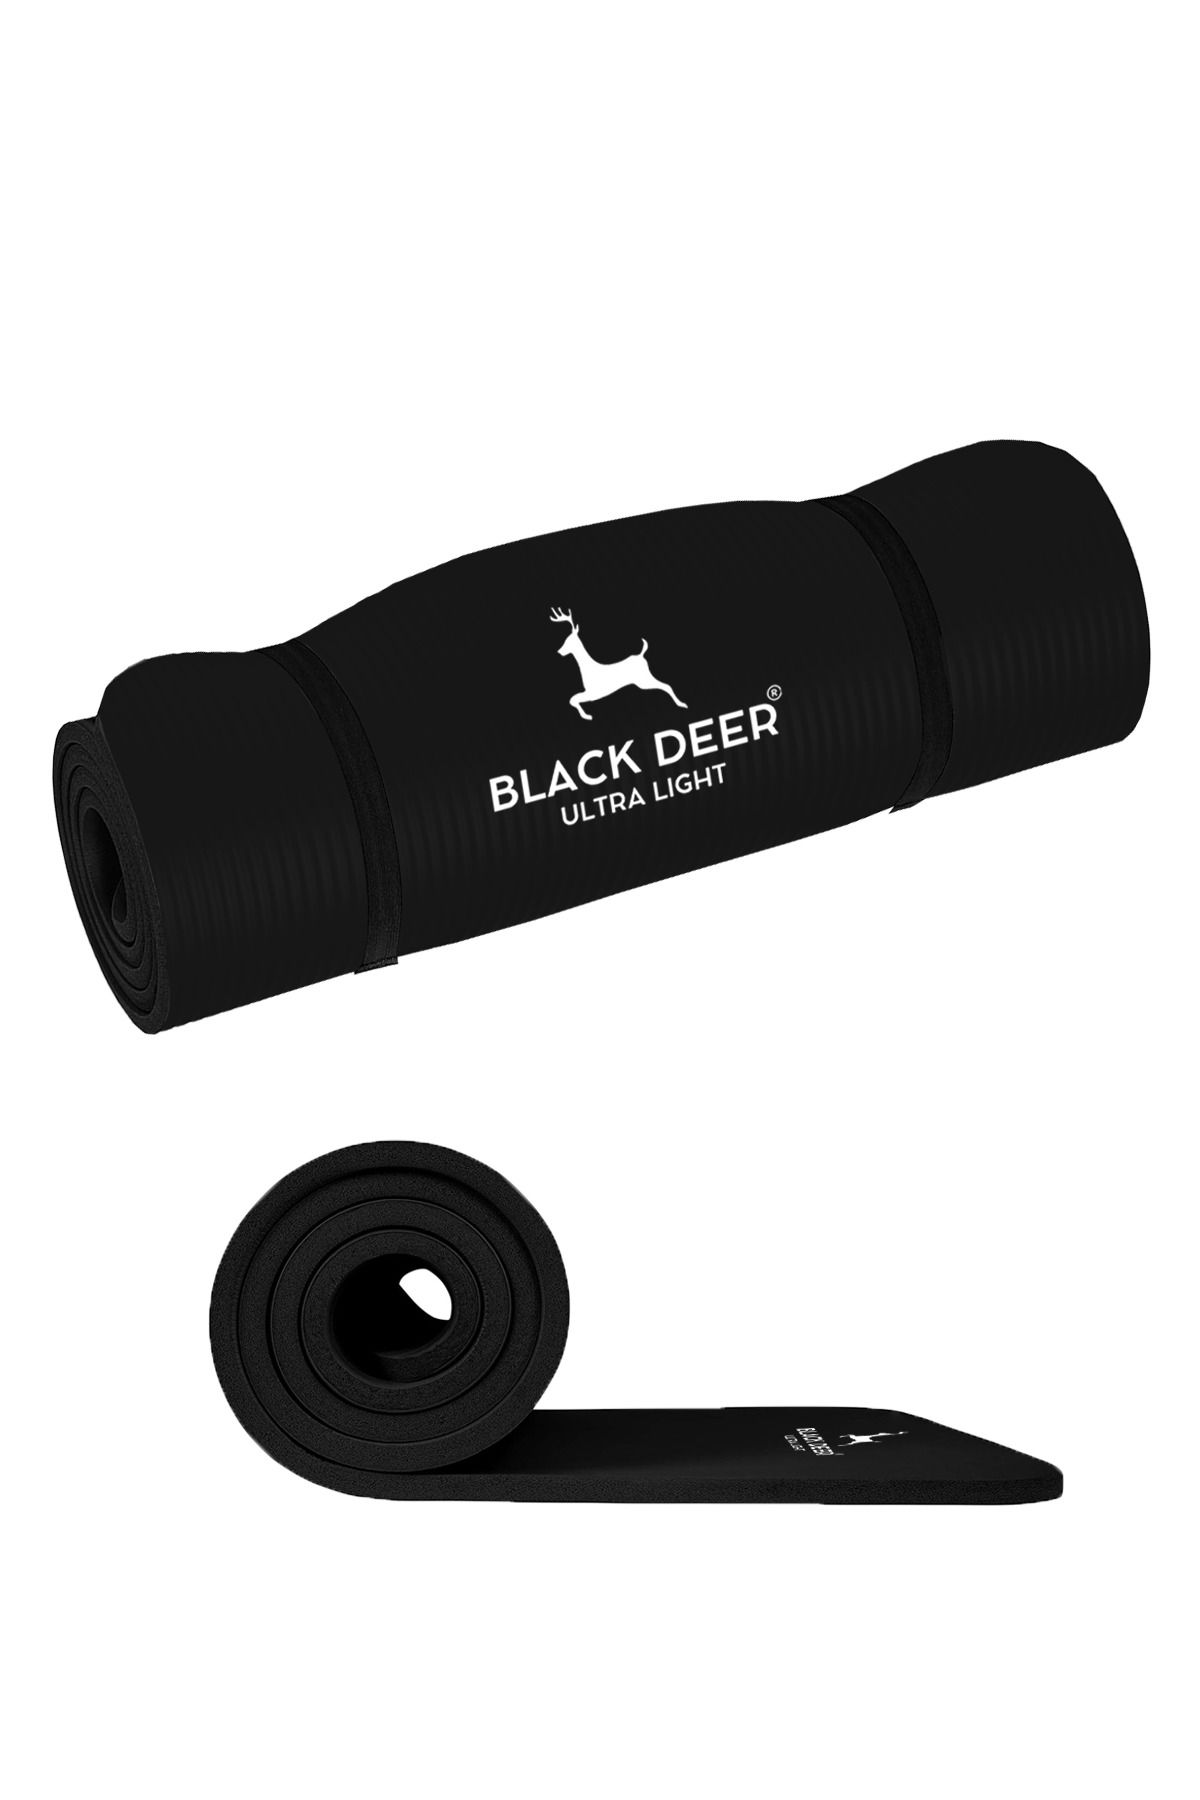 BLACK DEER Ultra Light Pilates Yoga Kamp Matı Egzersiz Minderi Kaymaz Taban 180x55 cm 10 mm